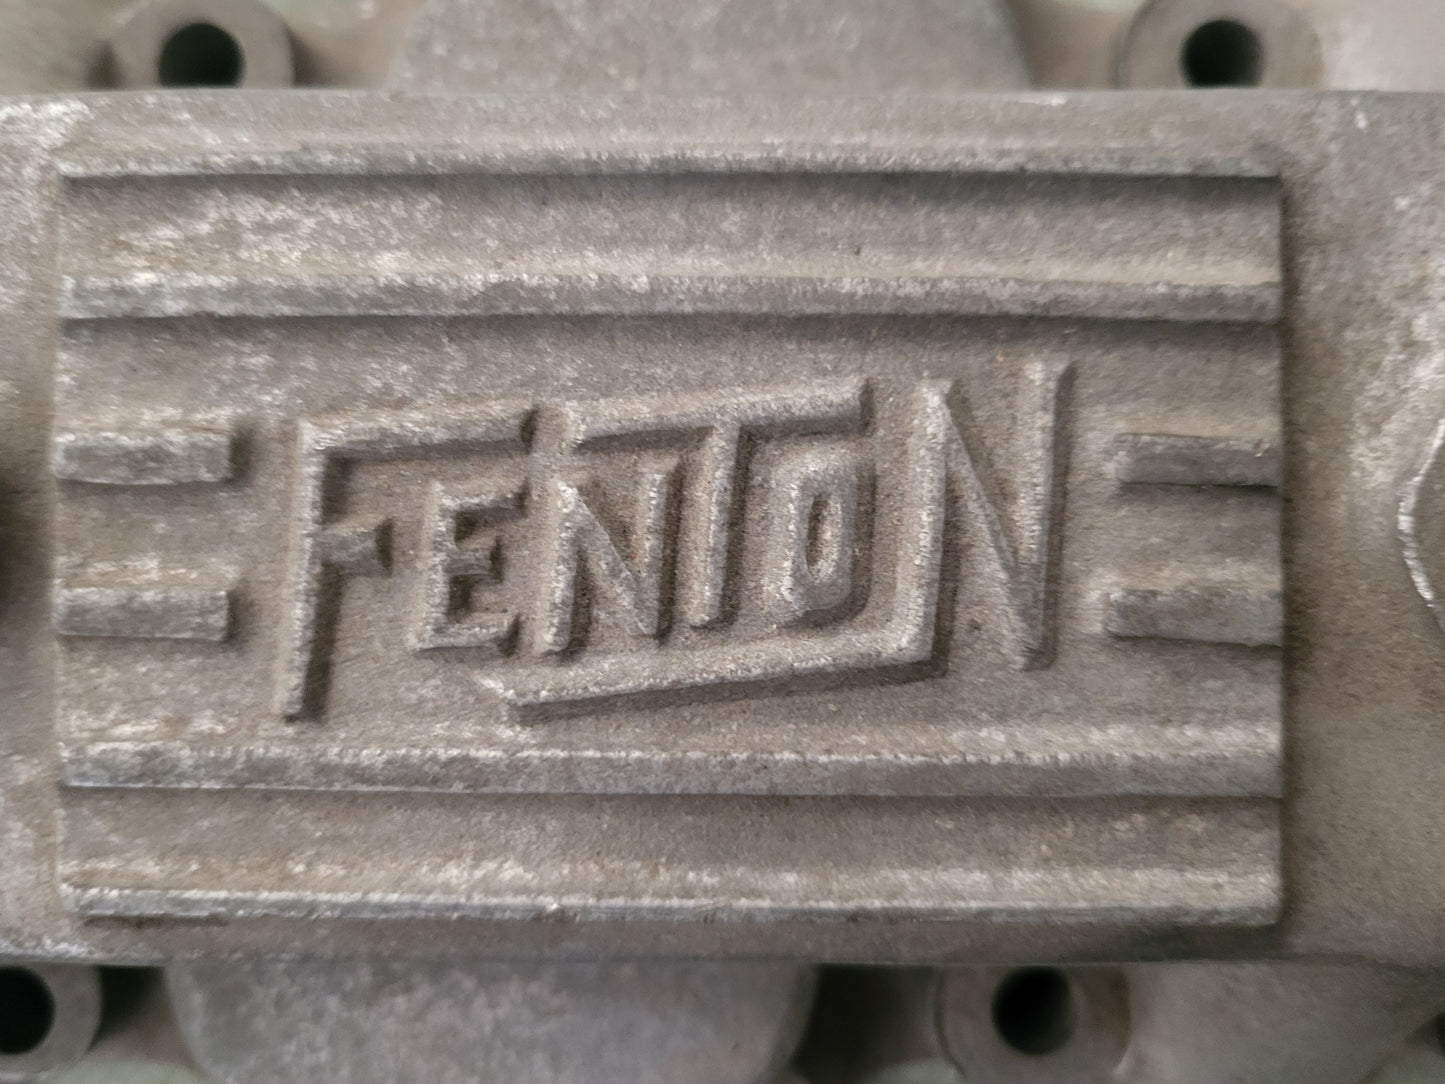 FENTON 2x2 Ford Flathead V8 Aluminum Intake Manifold Original